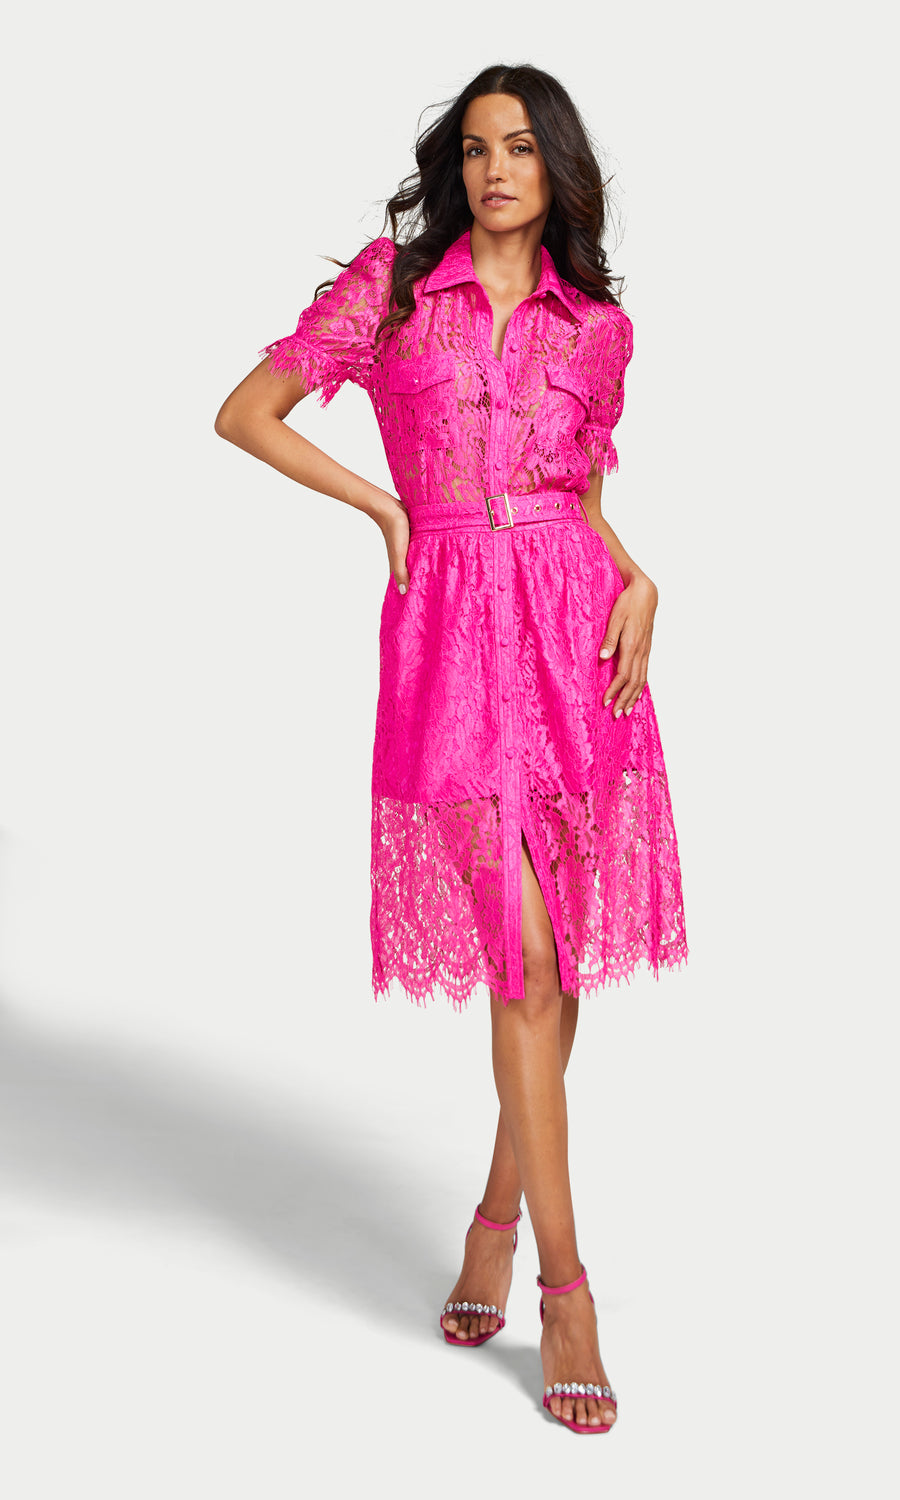 Claudia Lace Dress - Hot Pink